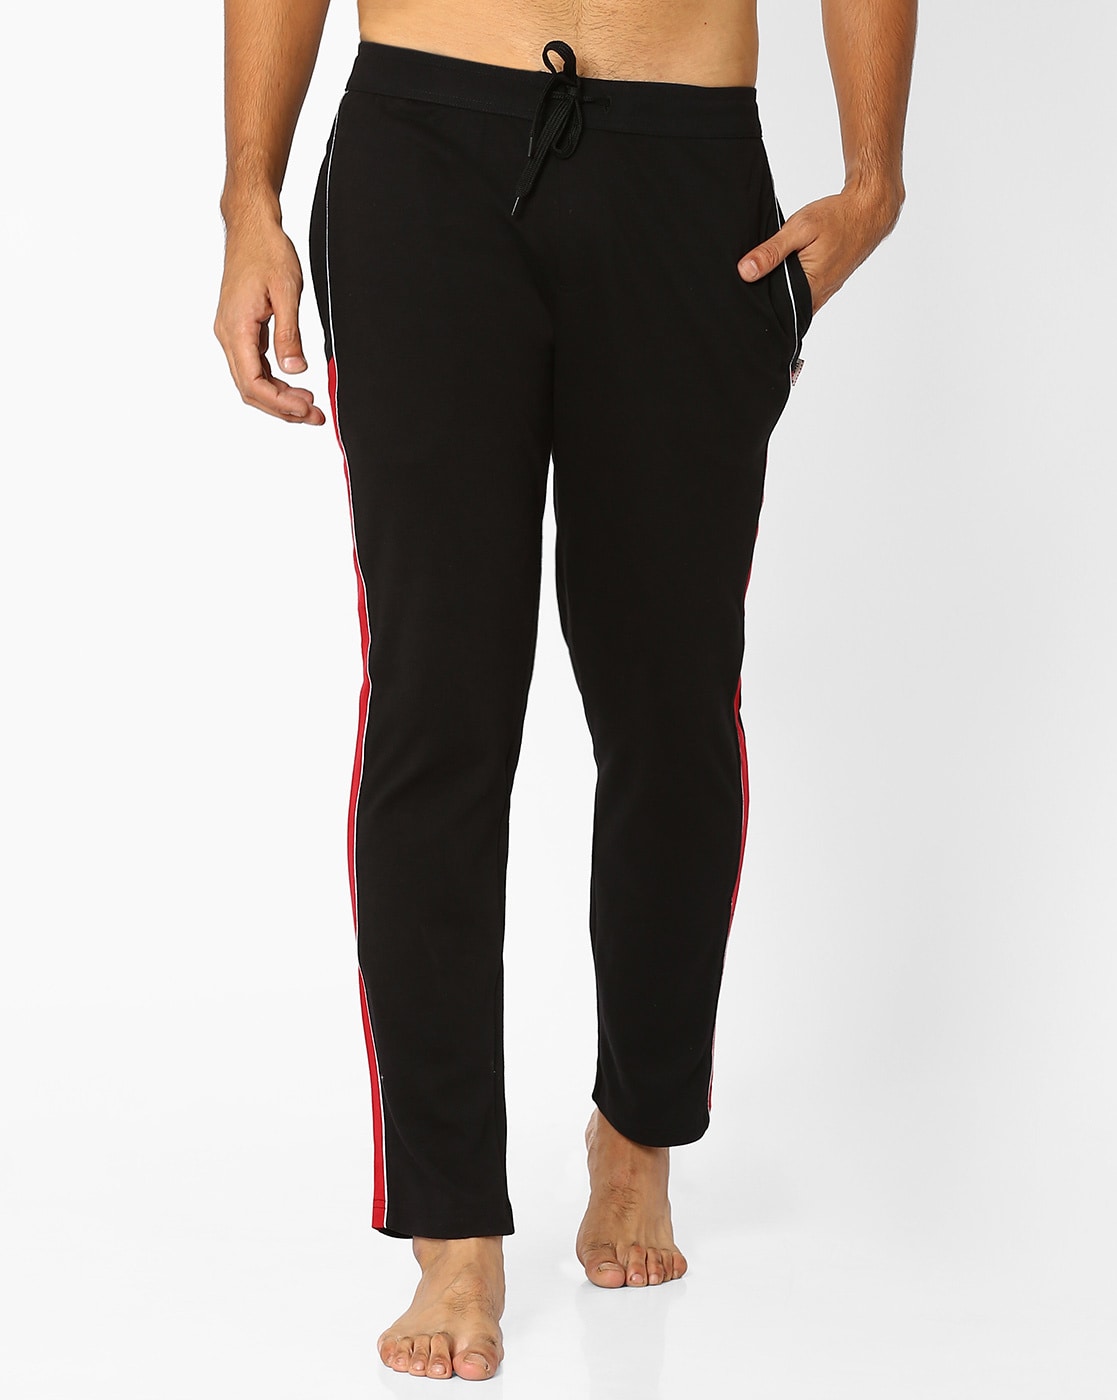 Hanes Mens 2-Pack Woven Stretch Pajama Short, Black/Black, Medium at Amazon  Men's Clothing store